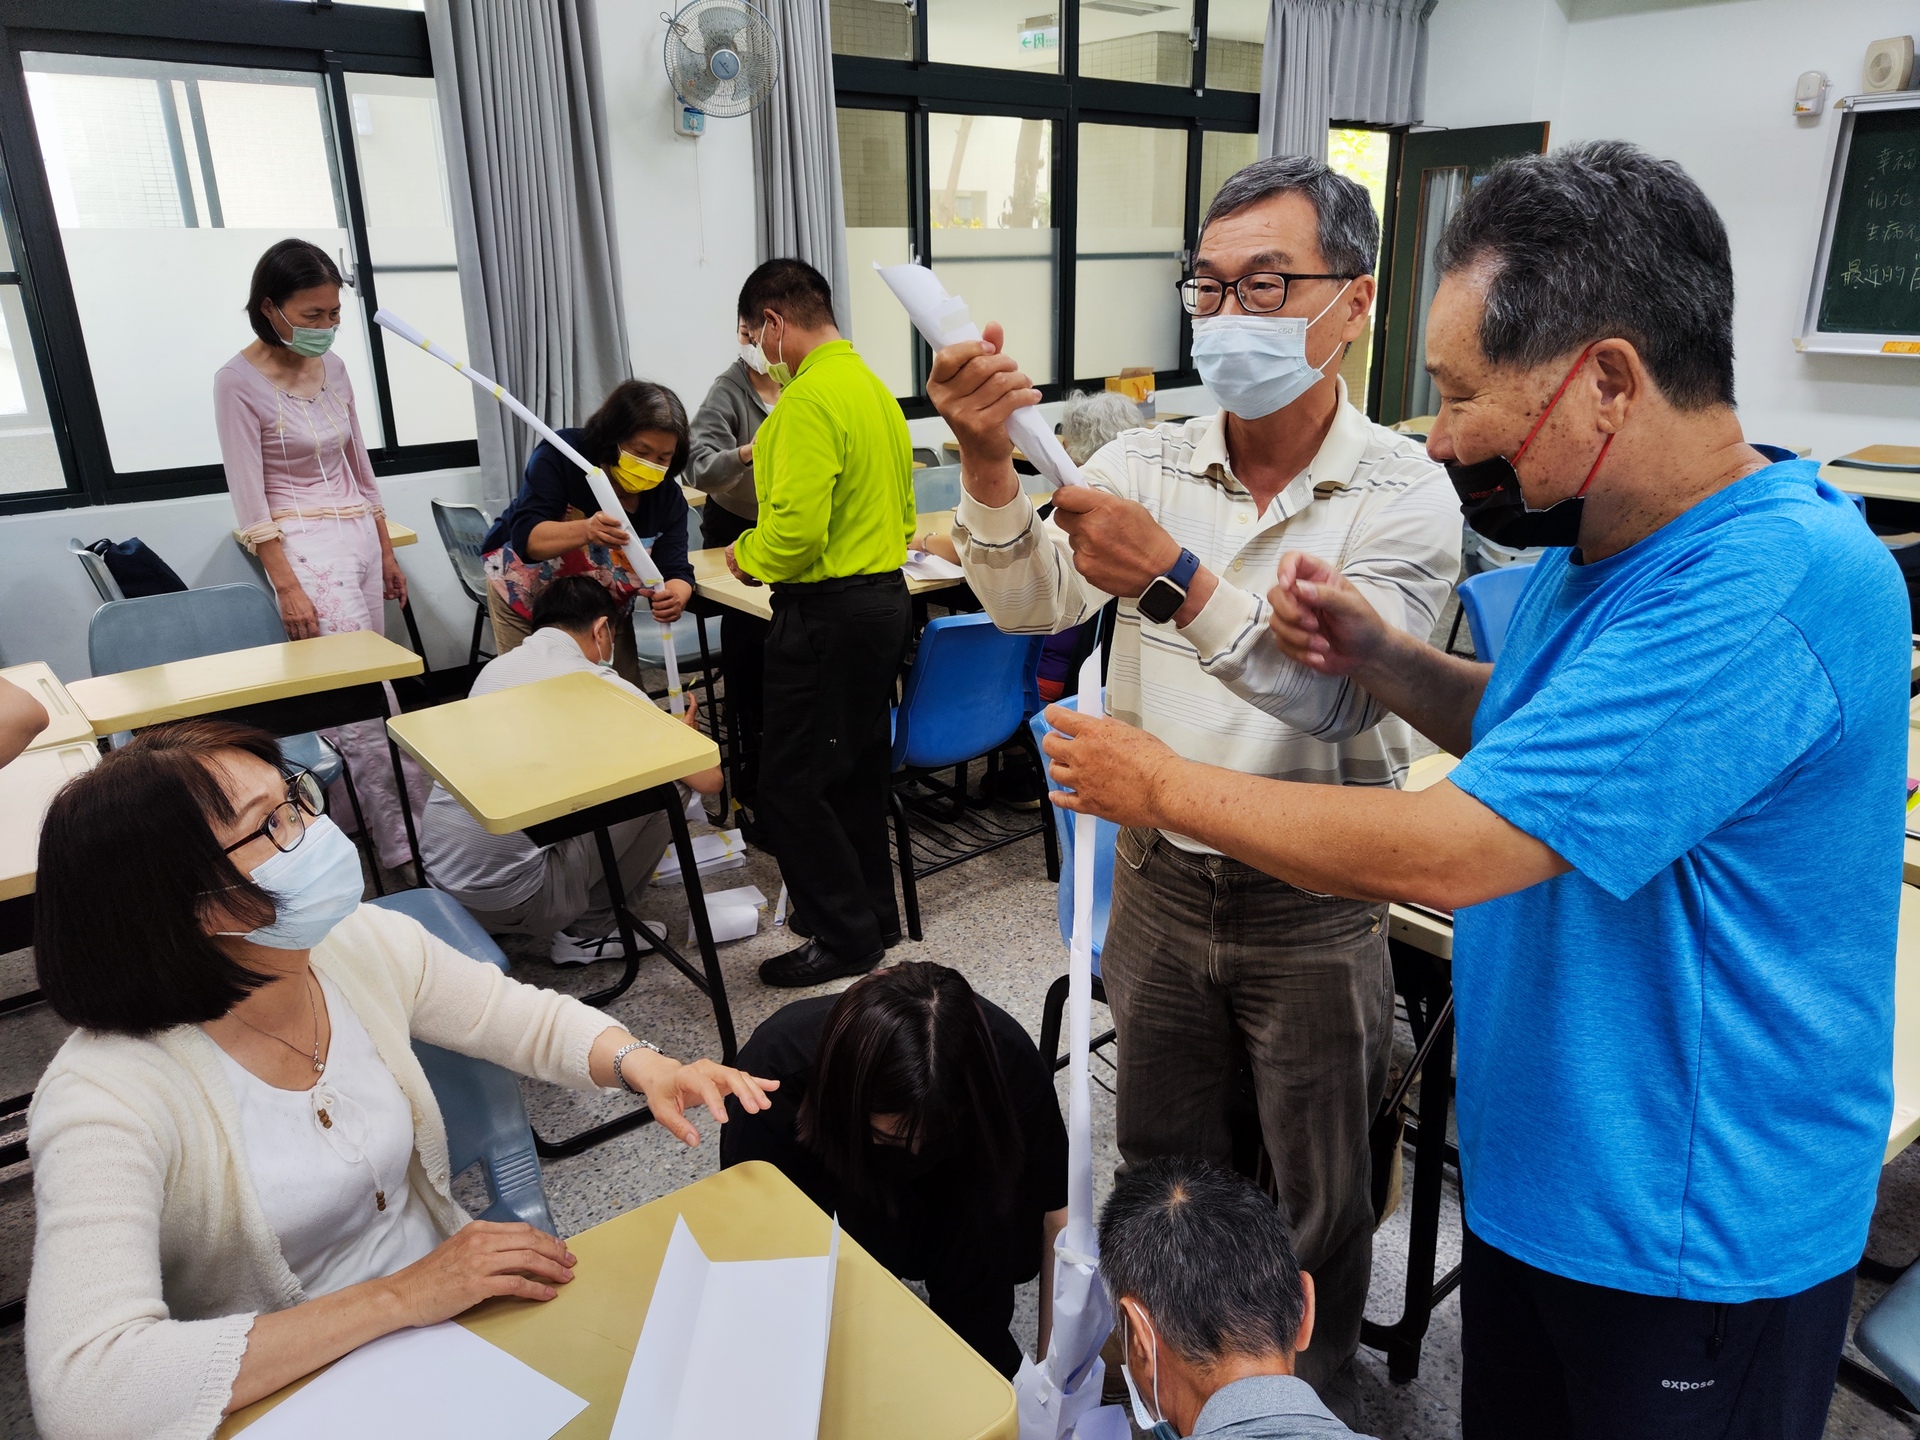 The Associate Professor, Kuei-Ju Tsai, held an activity to stimulate intergenerational dialogue03